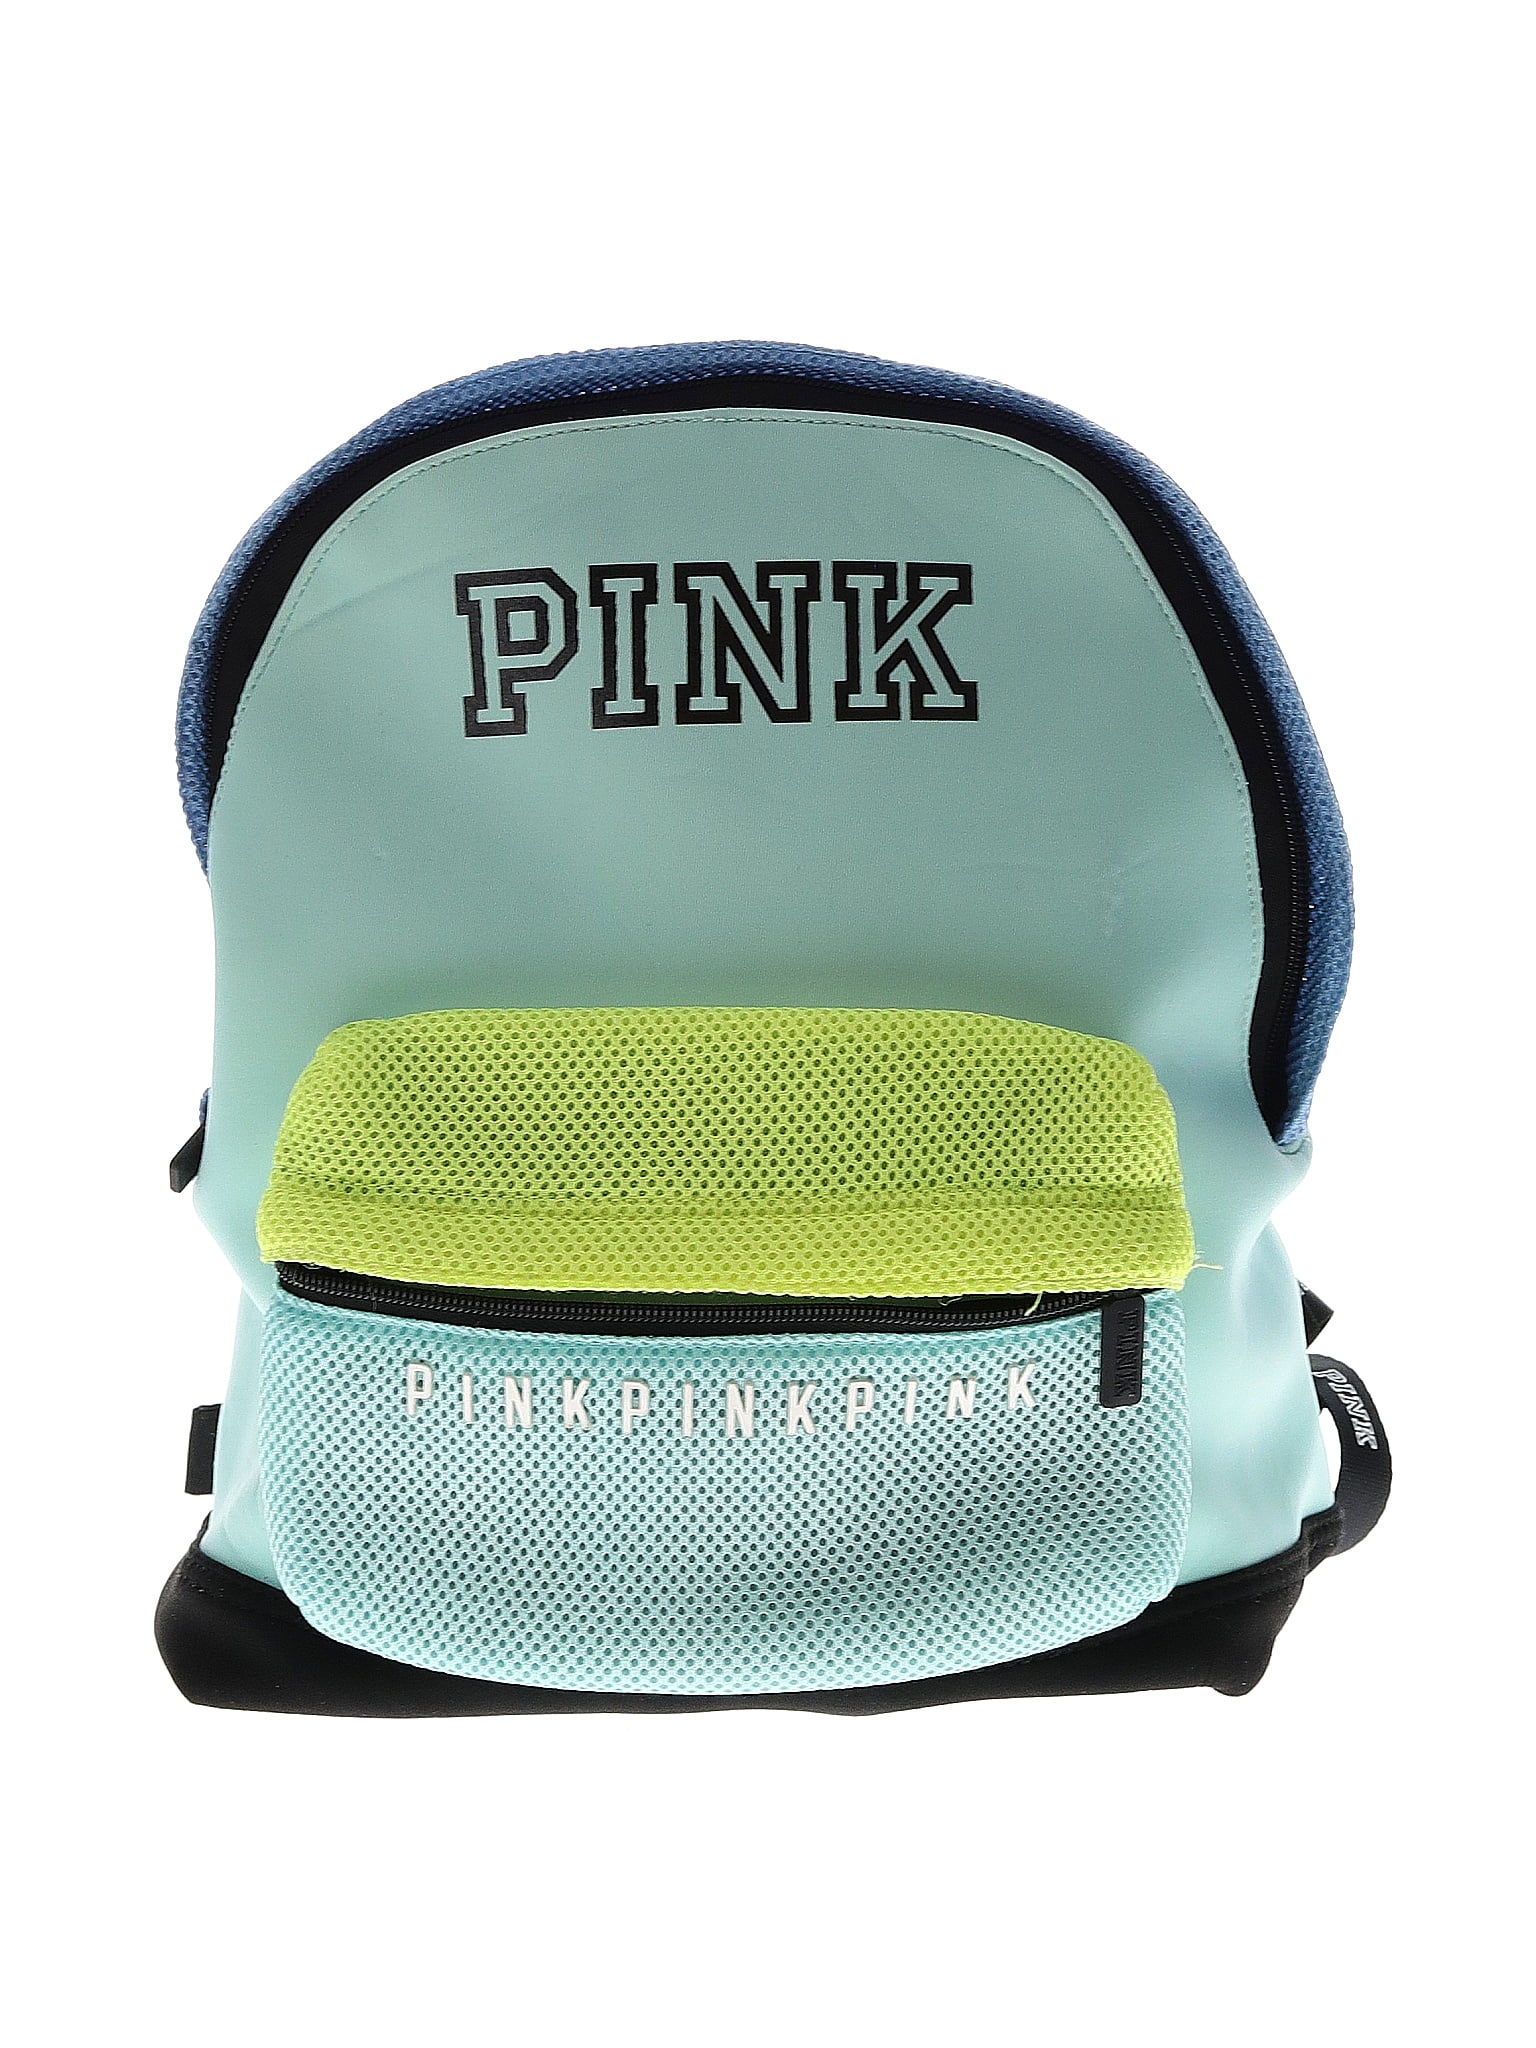 Victoria's Secret Pink Solid Multi Color Teal Backpack One Size